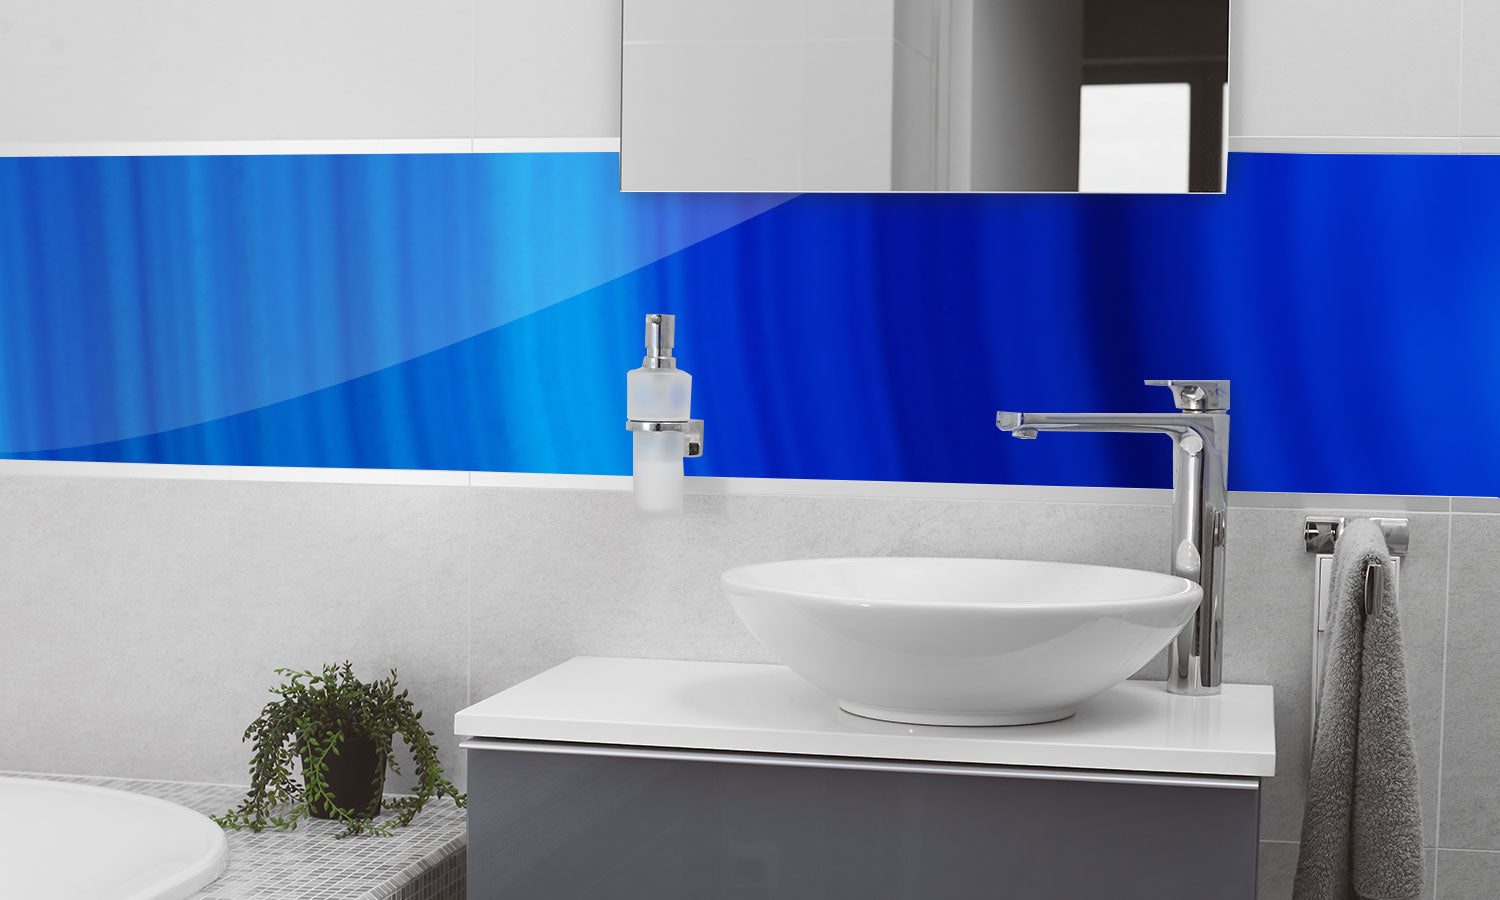 Paneli za kuhinje Blue slice -  Stakleni / PVC ploče / Pleksiglas -  sa printom za kuhinju, Zidne obloge PKU133